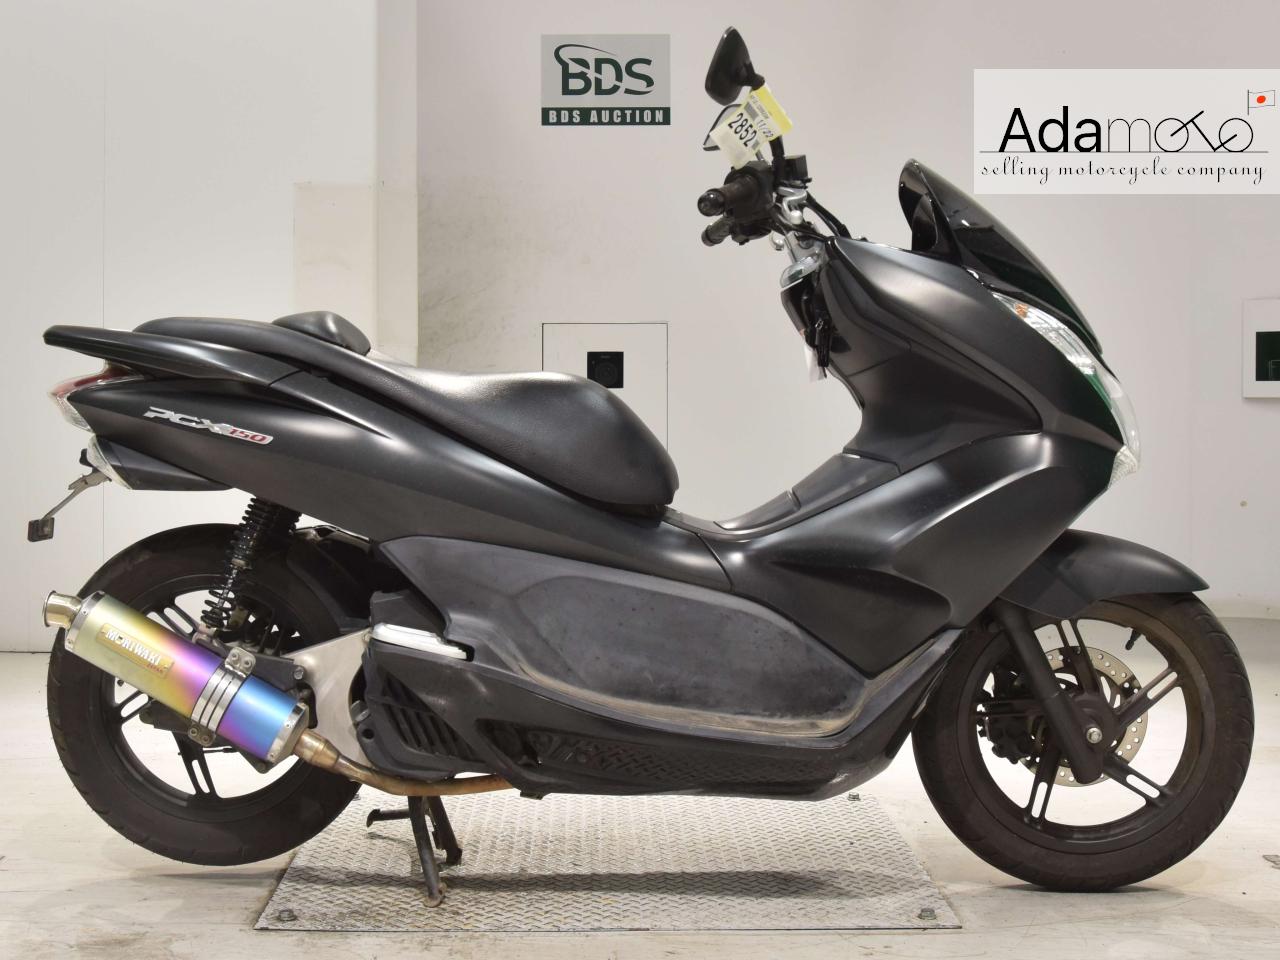 Honda PCX150 - Adamoto - Motorcycles from Japan